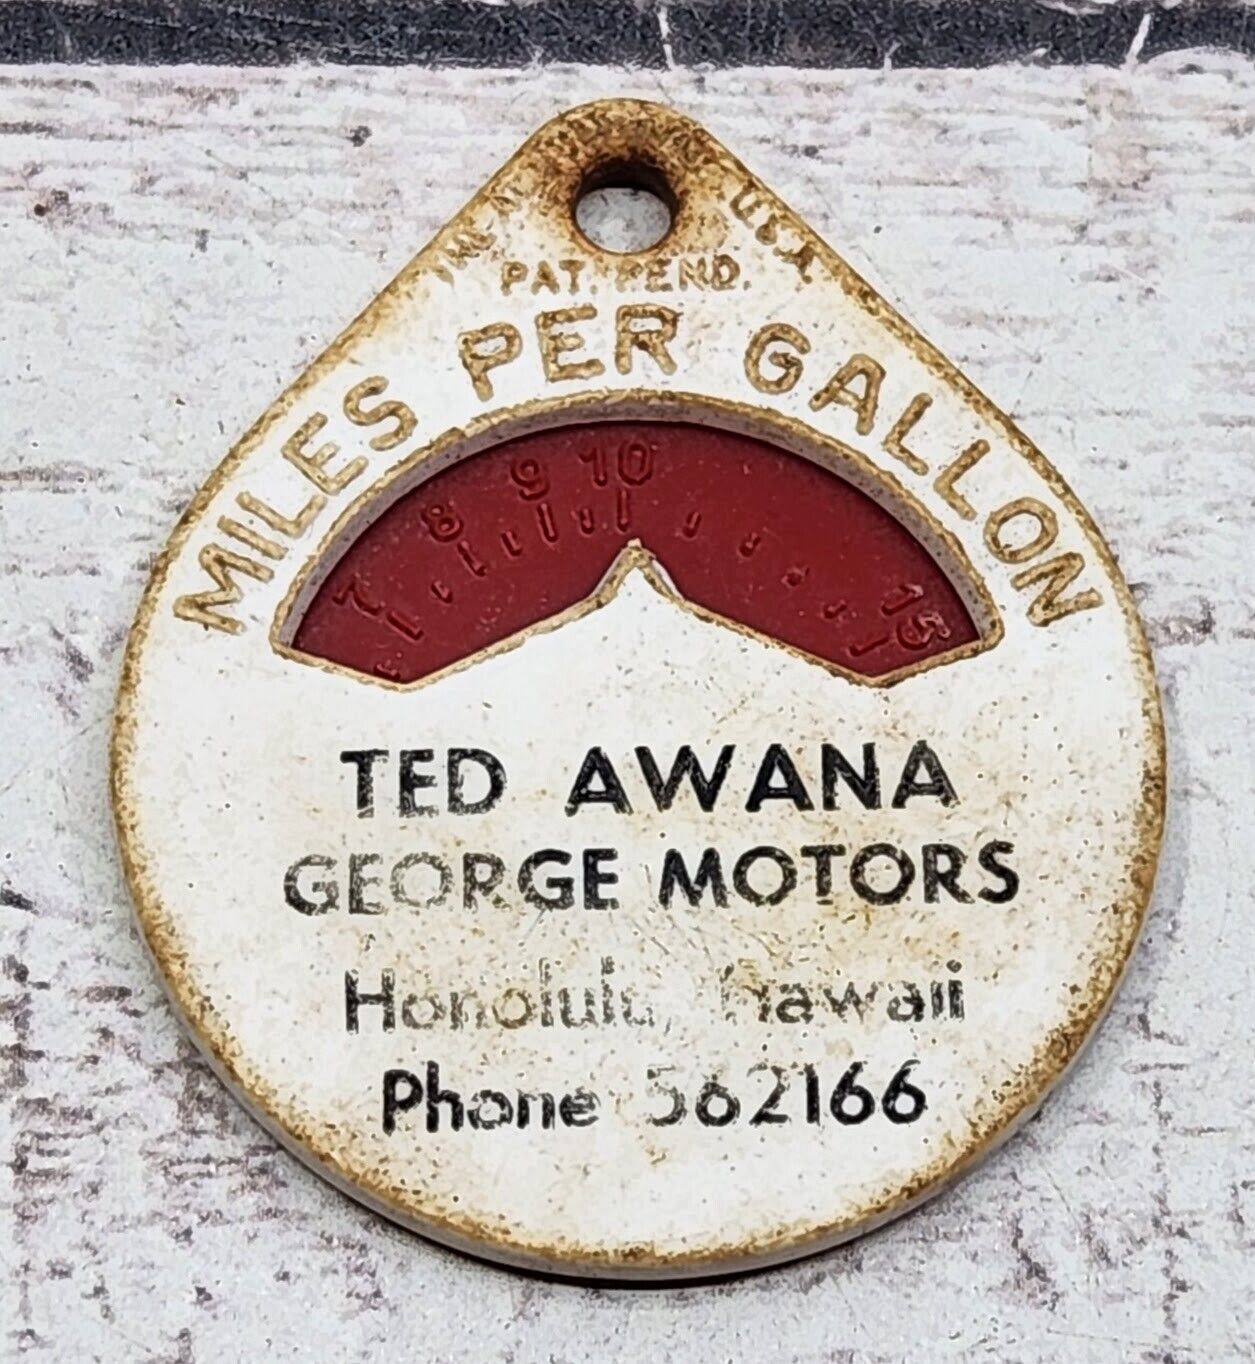 Vintage Miles per Gallon Calculator Keychain Pendant Hawaiian Ted Awana Motors